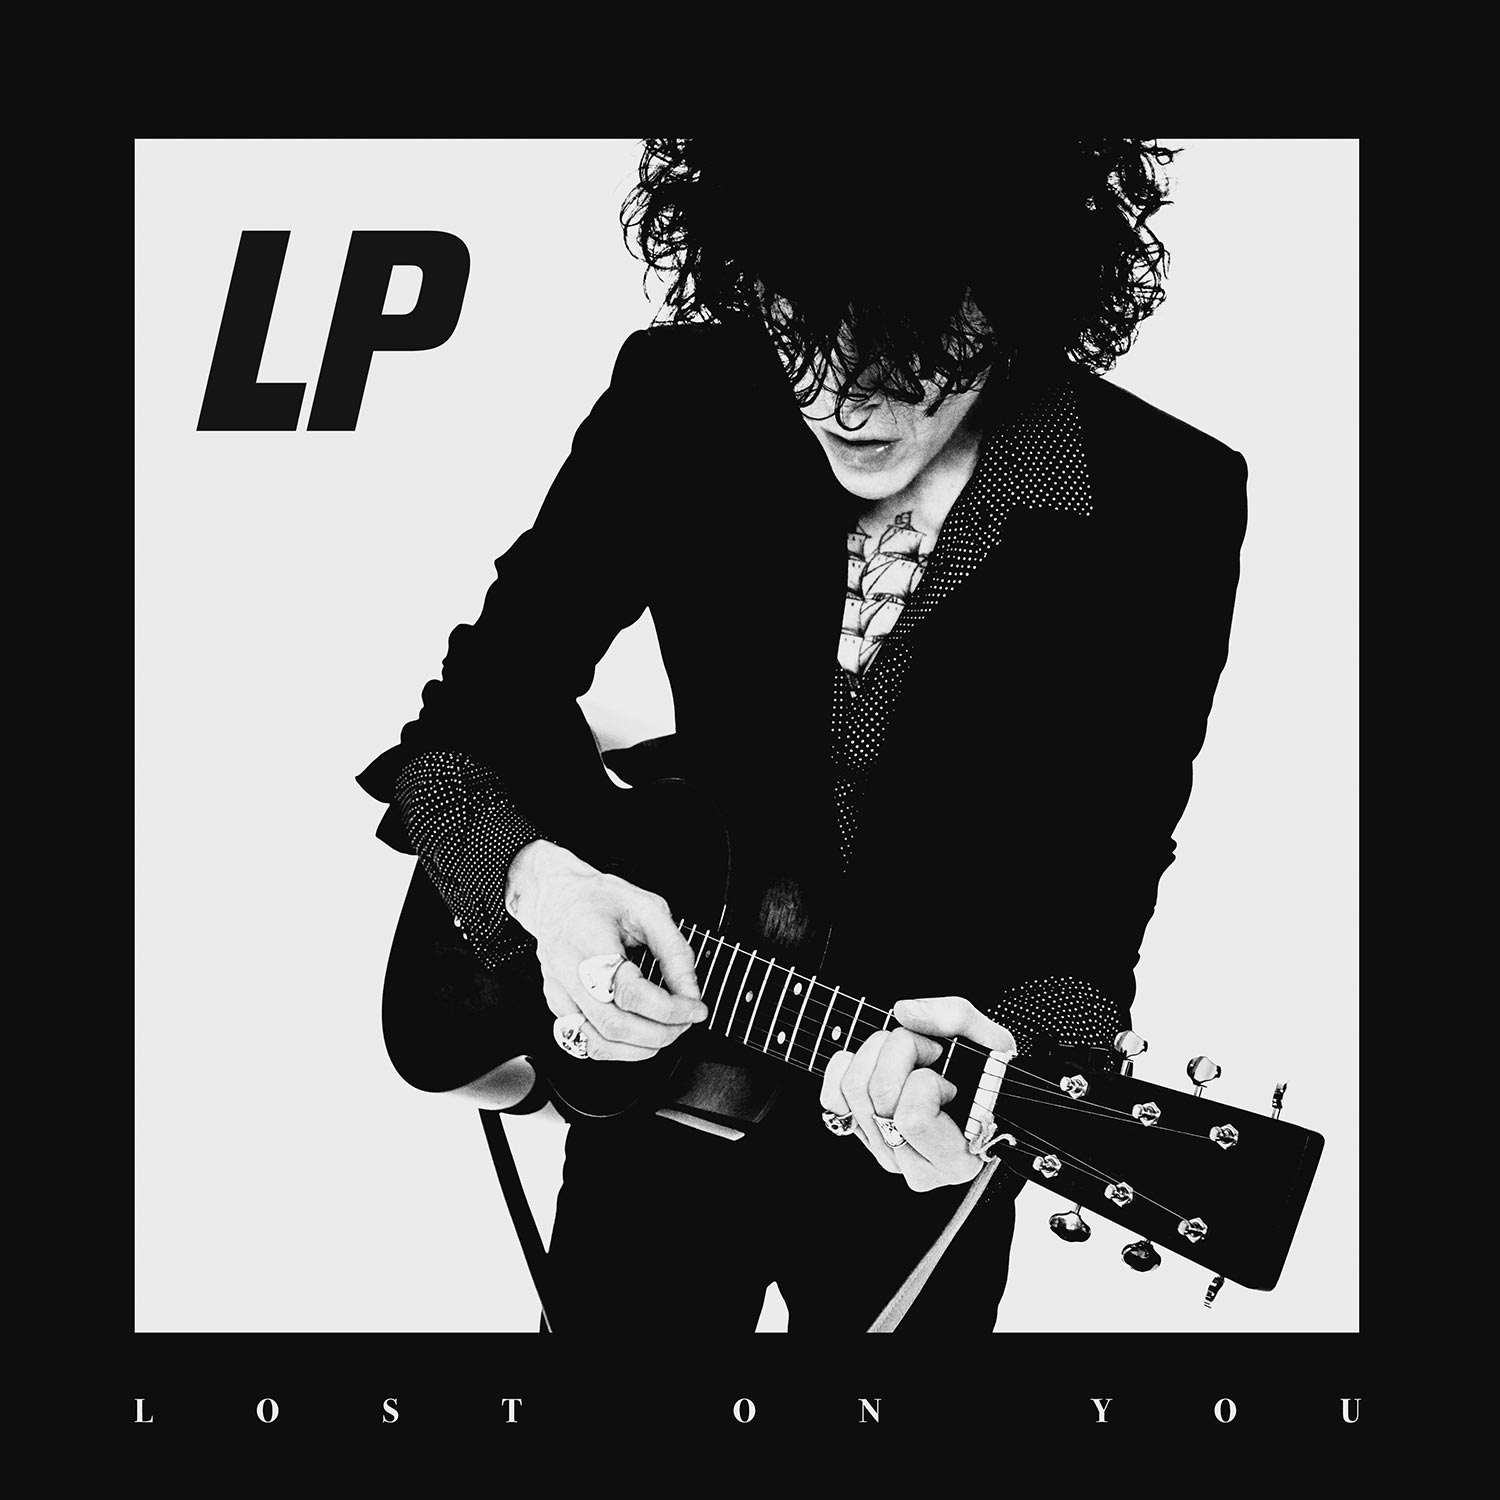 LP: Lost on you, la portada del disco